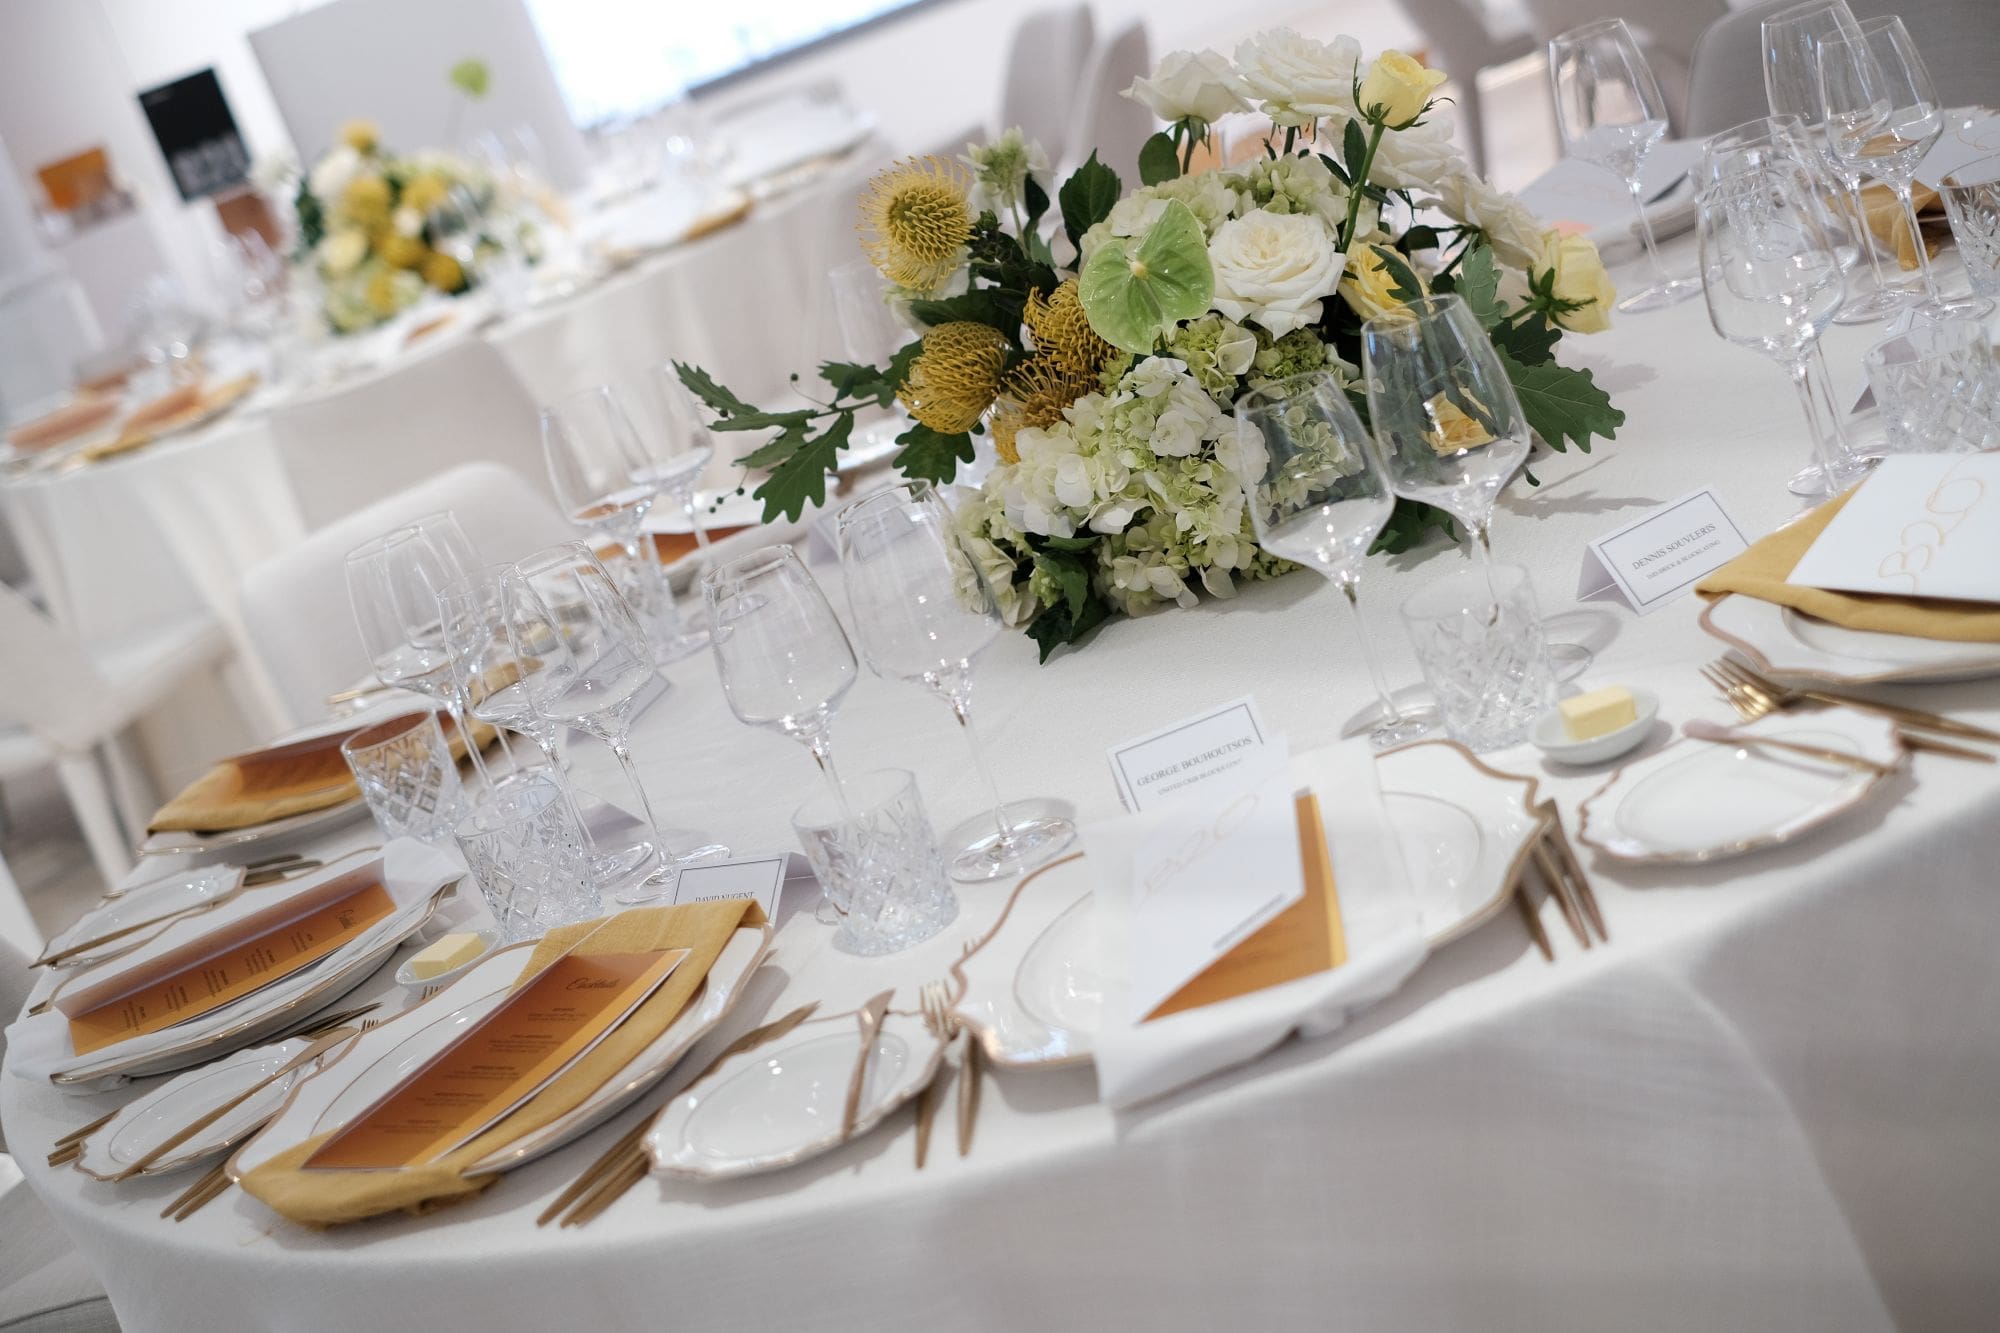 trending menu options for Sydney wedding catering
